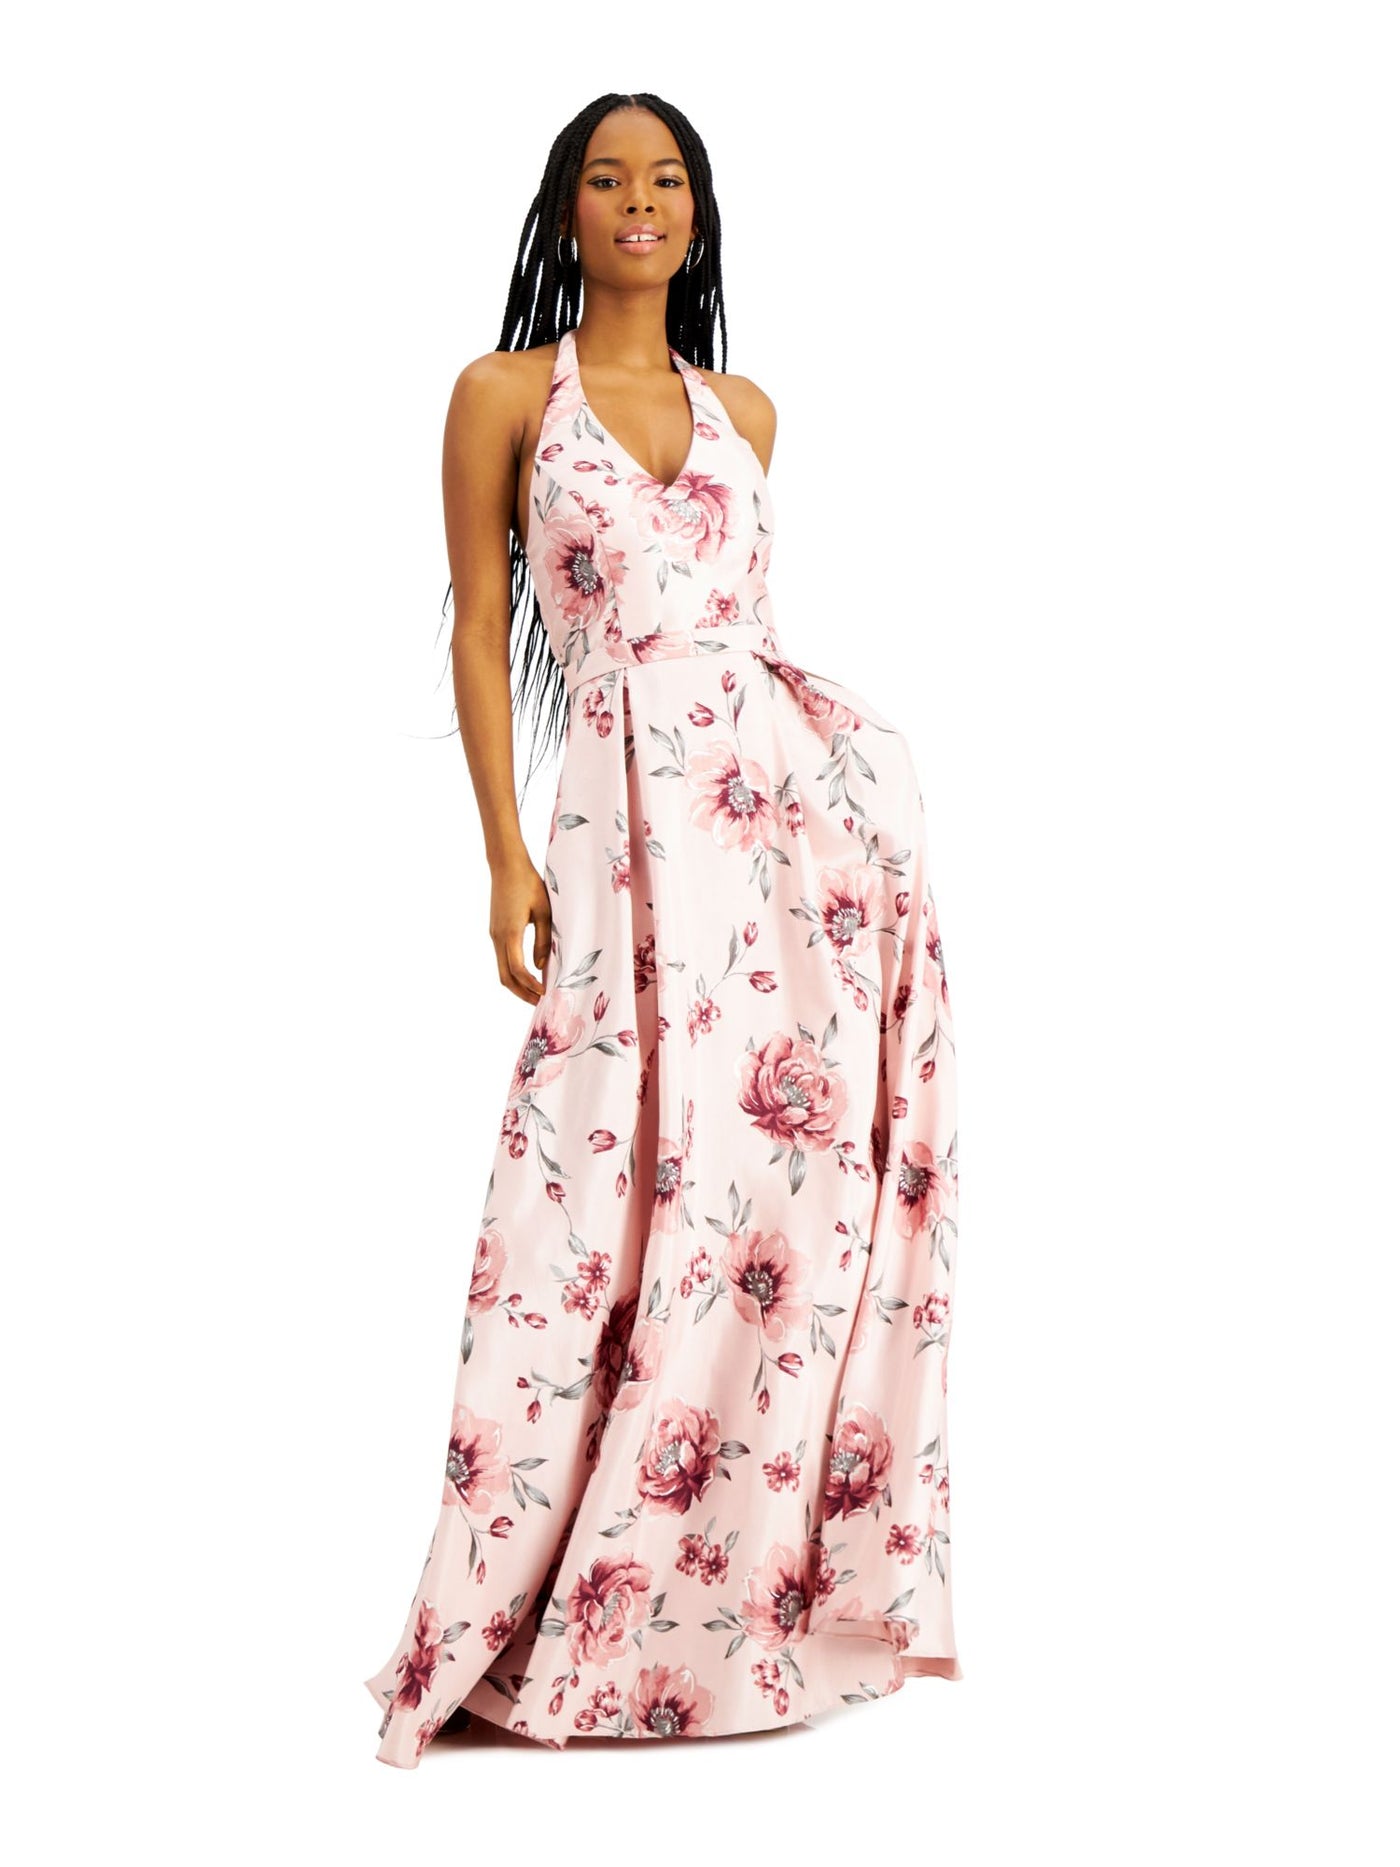 CITY STUDIO Womens Pink Floral Sleeveless Halter Full-Length  Fit + Flare Prom Dress Juniors 5